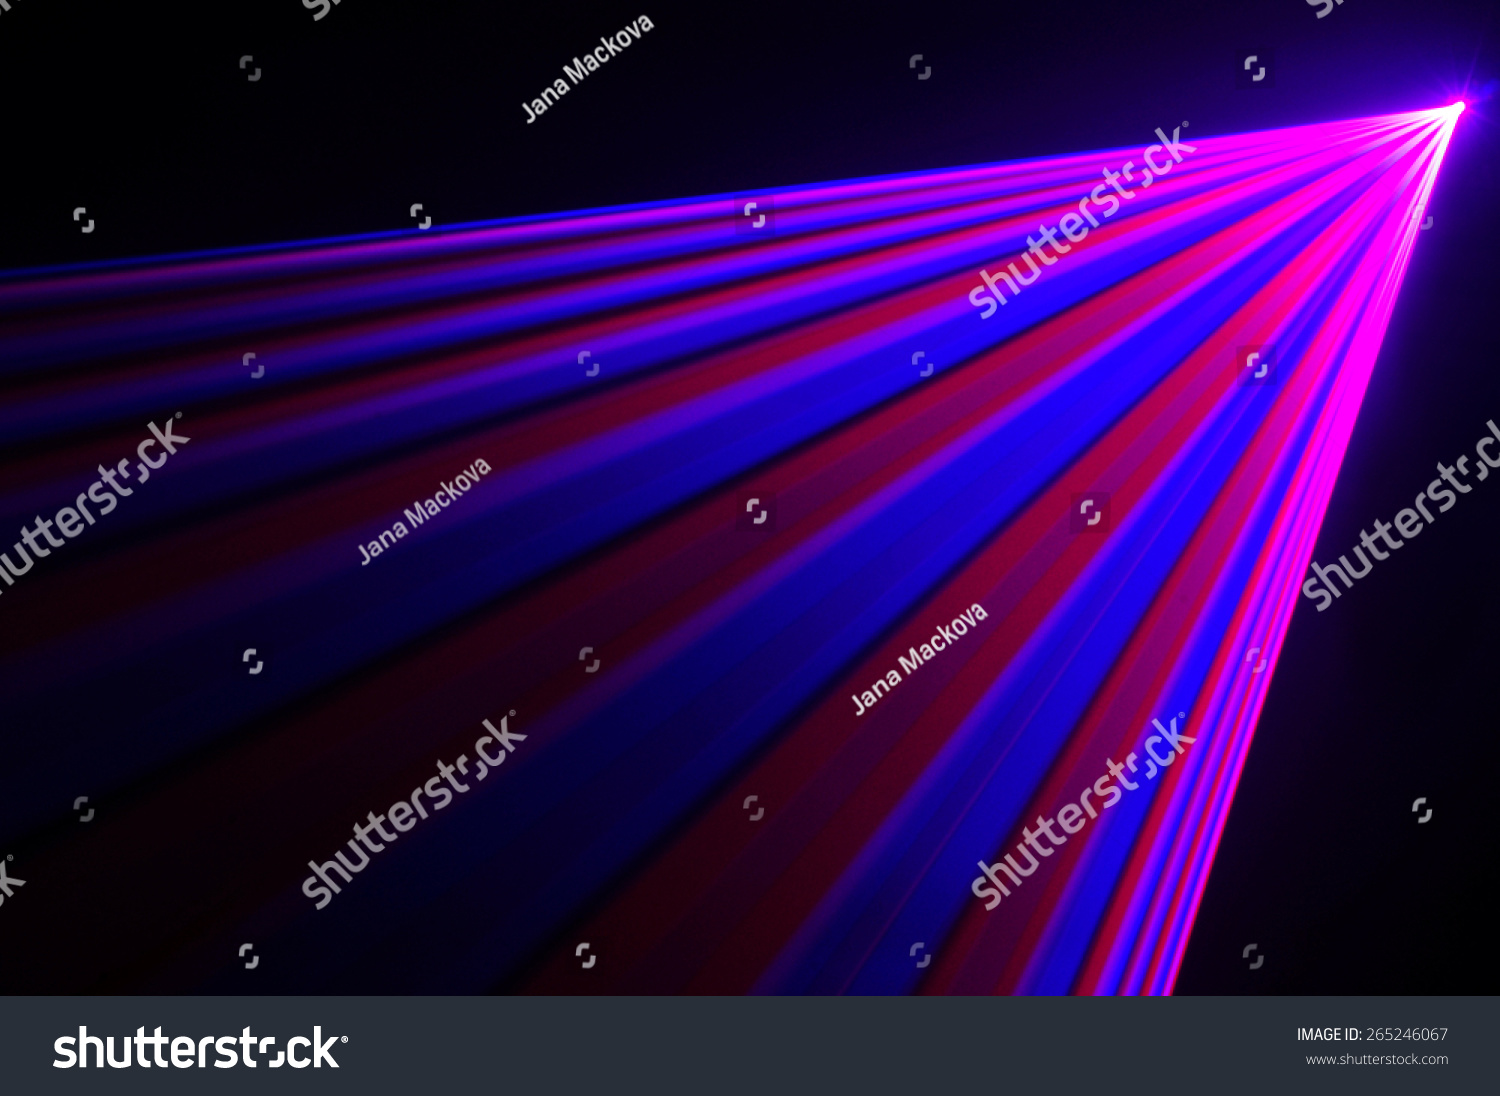 Laserlight Stock Photo 265246067 - Shutterstock